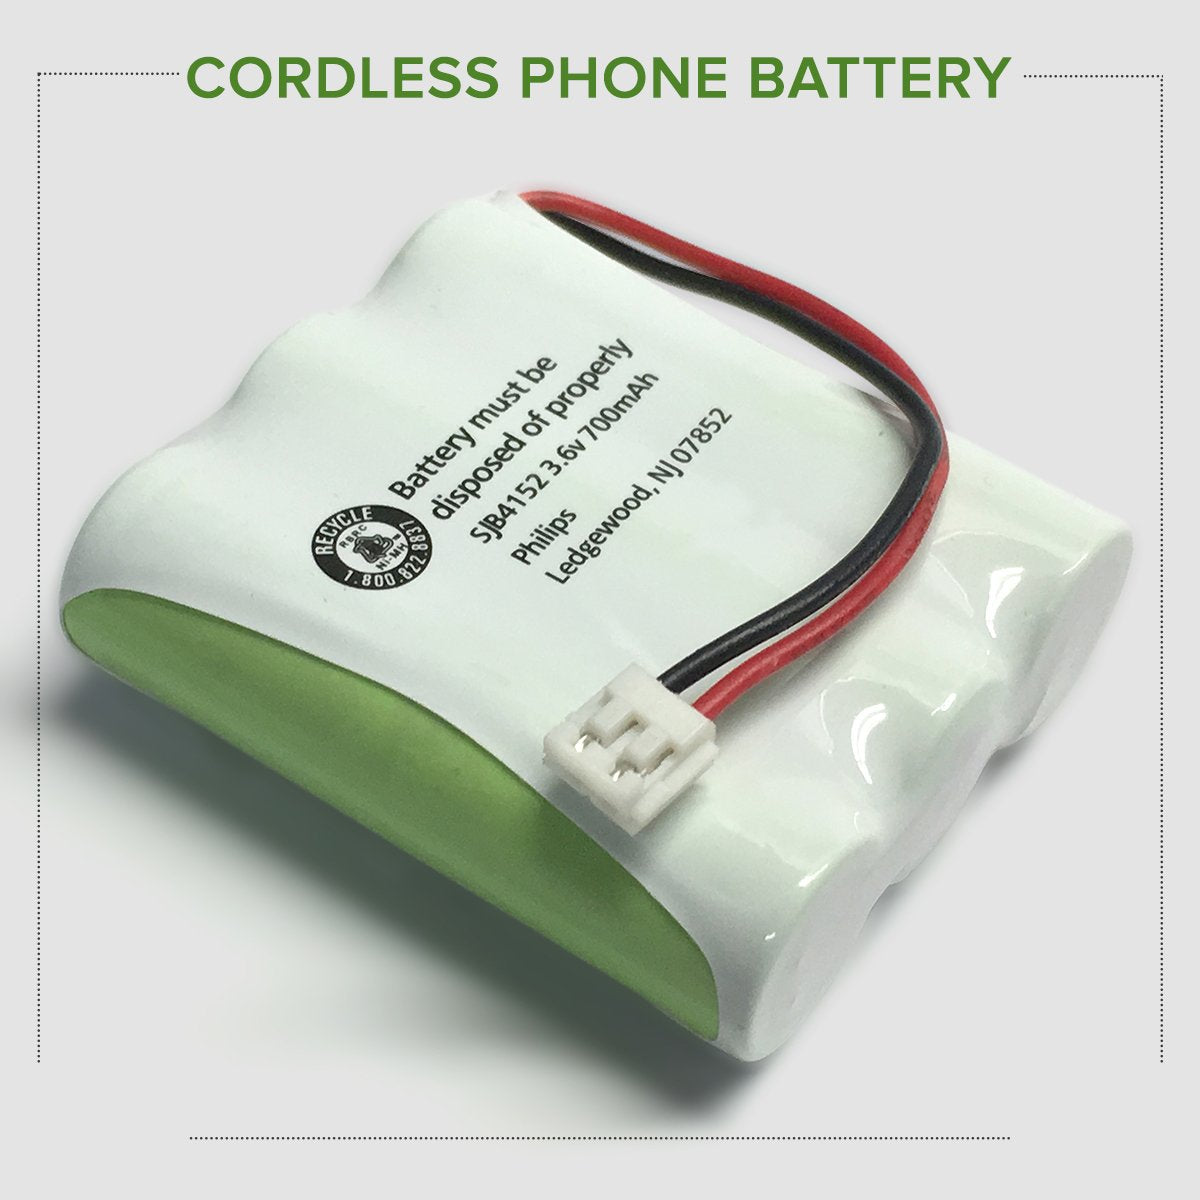 GE 2-7881 Cordless Phone Battery